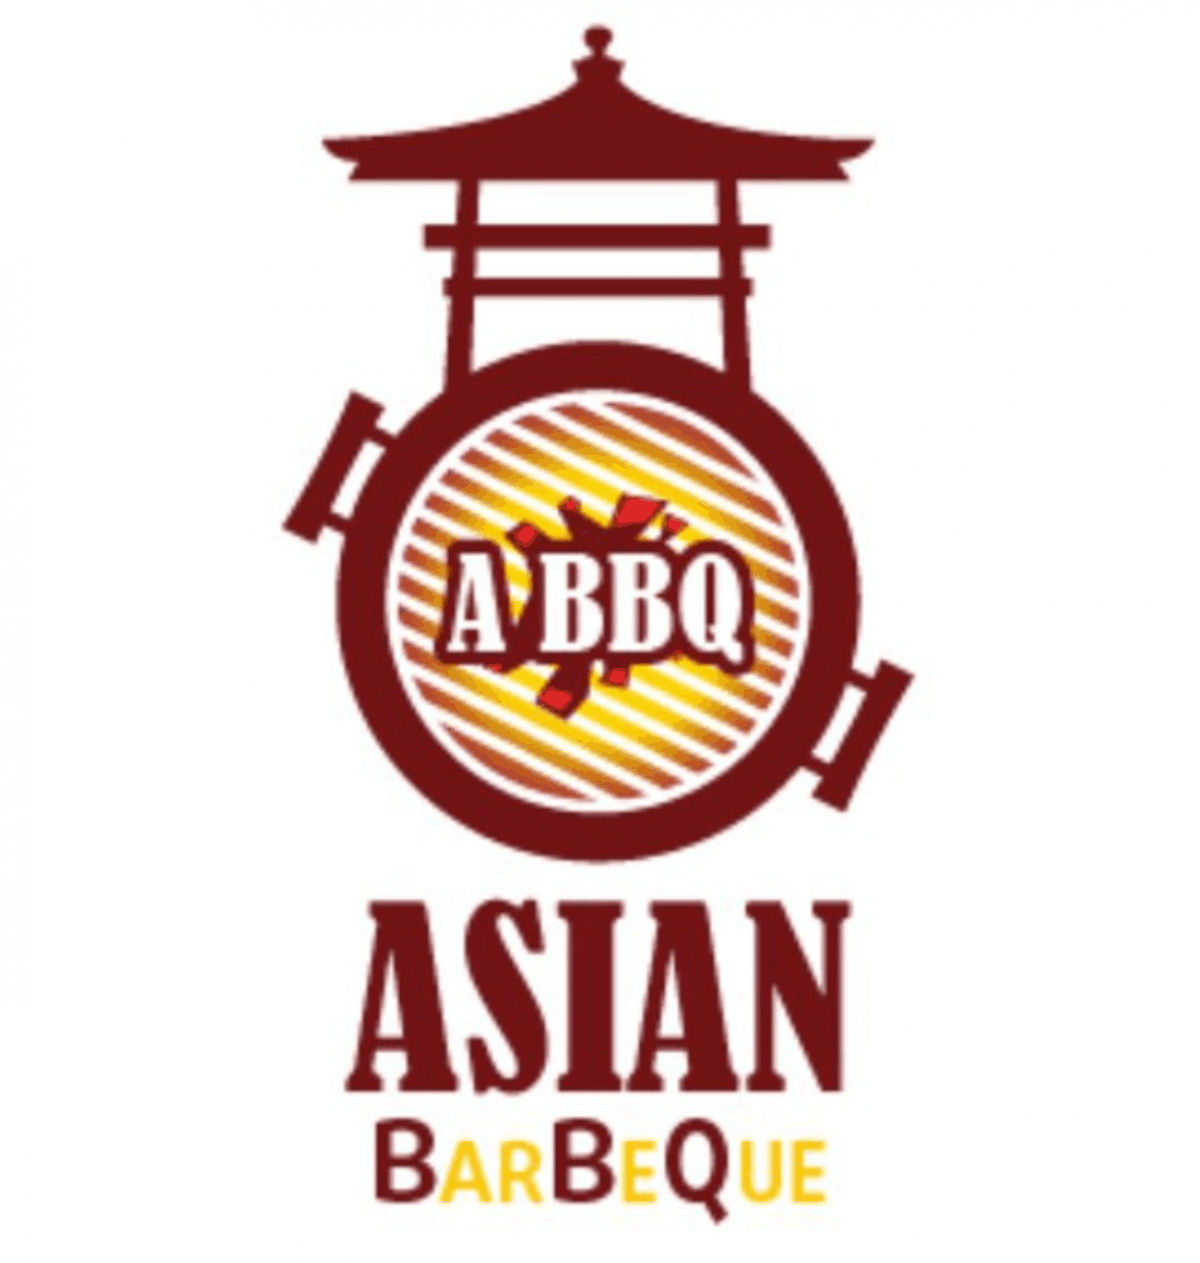 Asian bbq